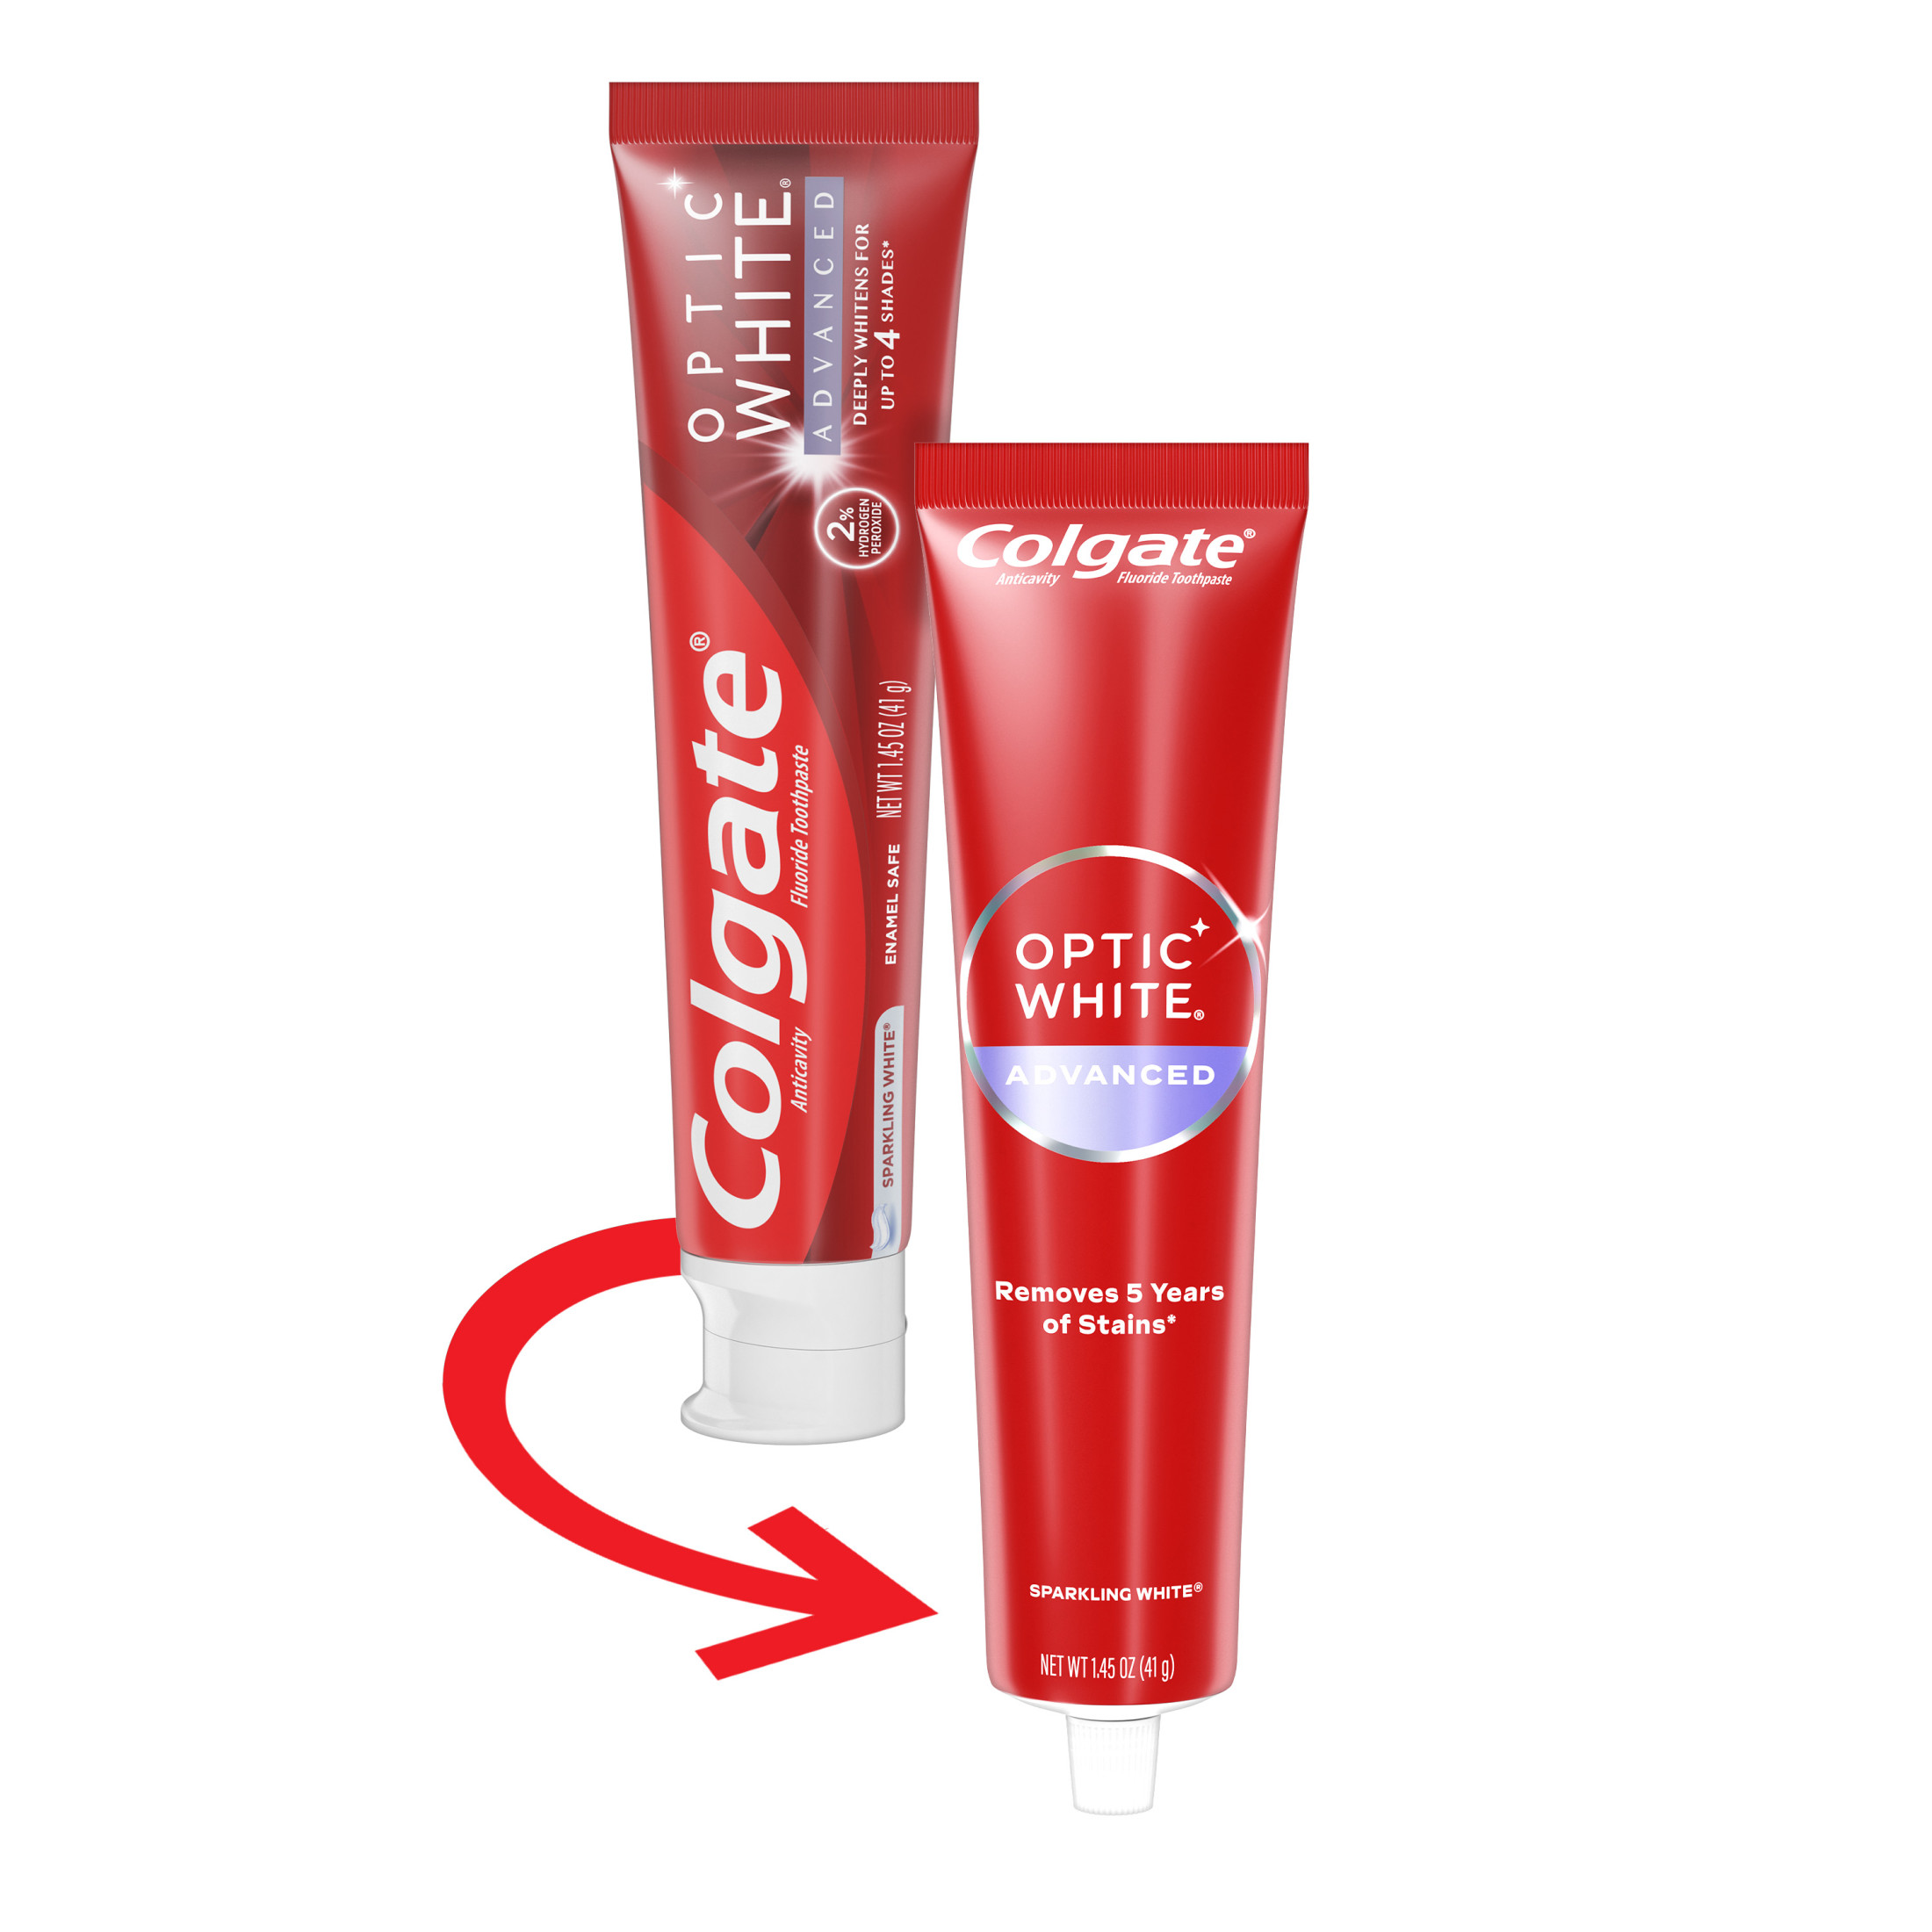 Colgate Travel Size Optic White Advanced Hydrogen Peroxide Toothpaste, Sparkling White, 1.45 oz - image 1 of 13